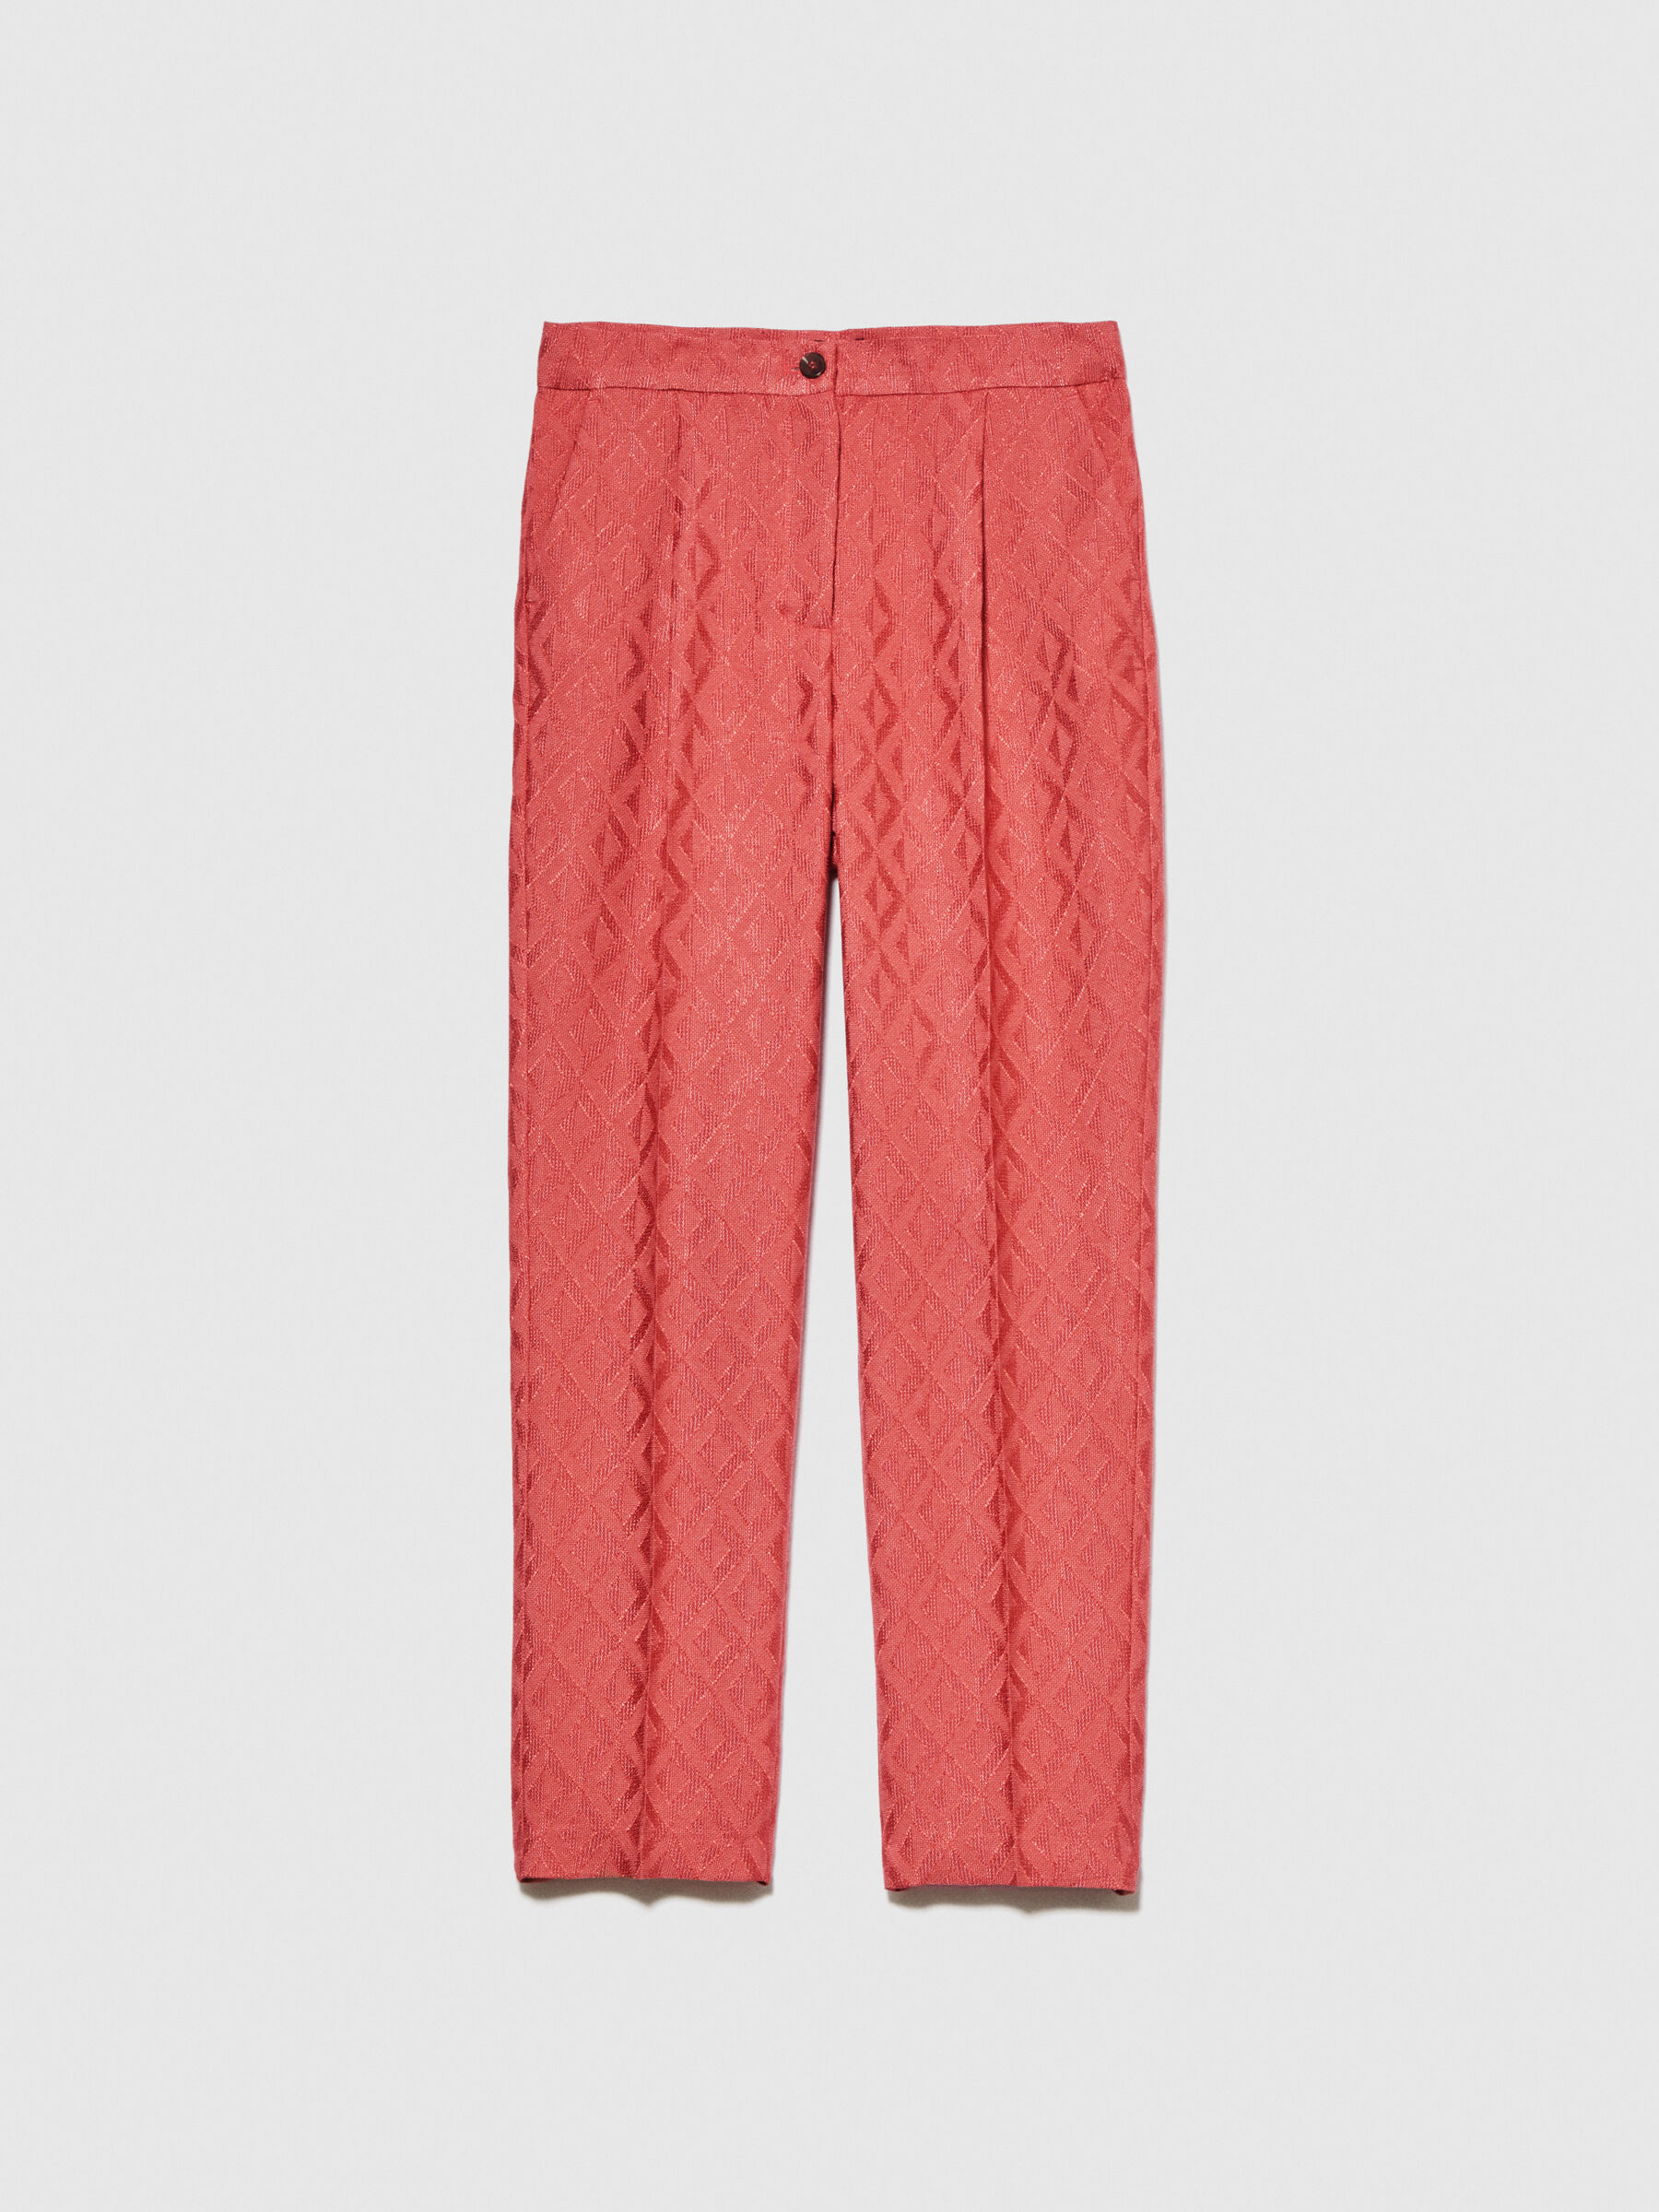 COLLUSION satin jacquard trouser in pink | ASOS | Trousers, Fashion,  Jacquard